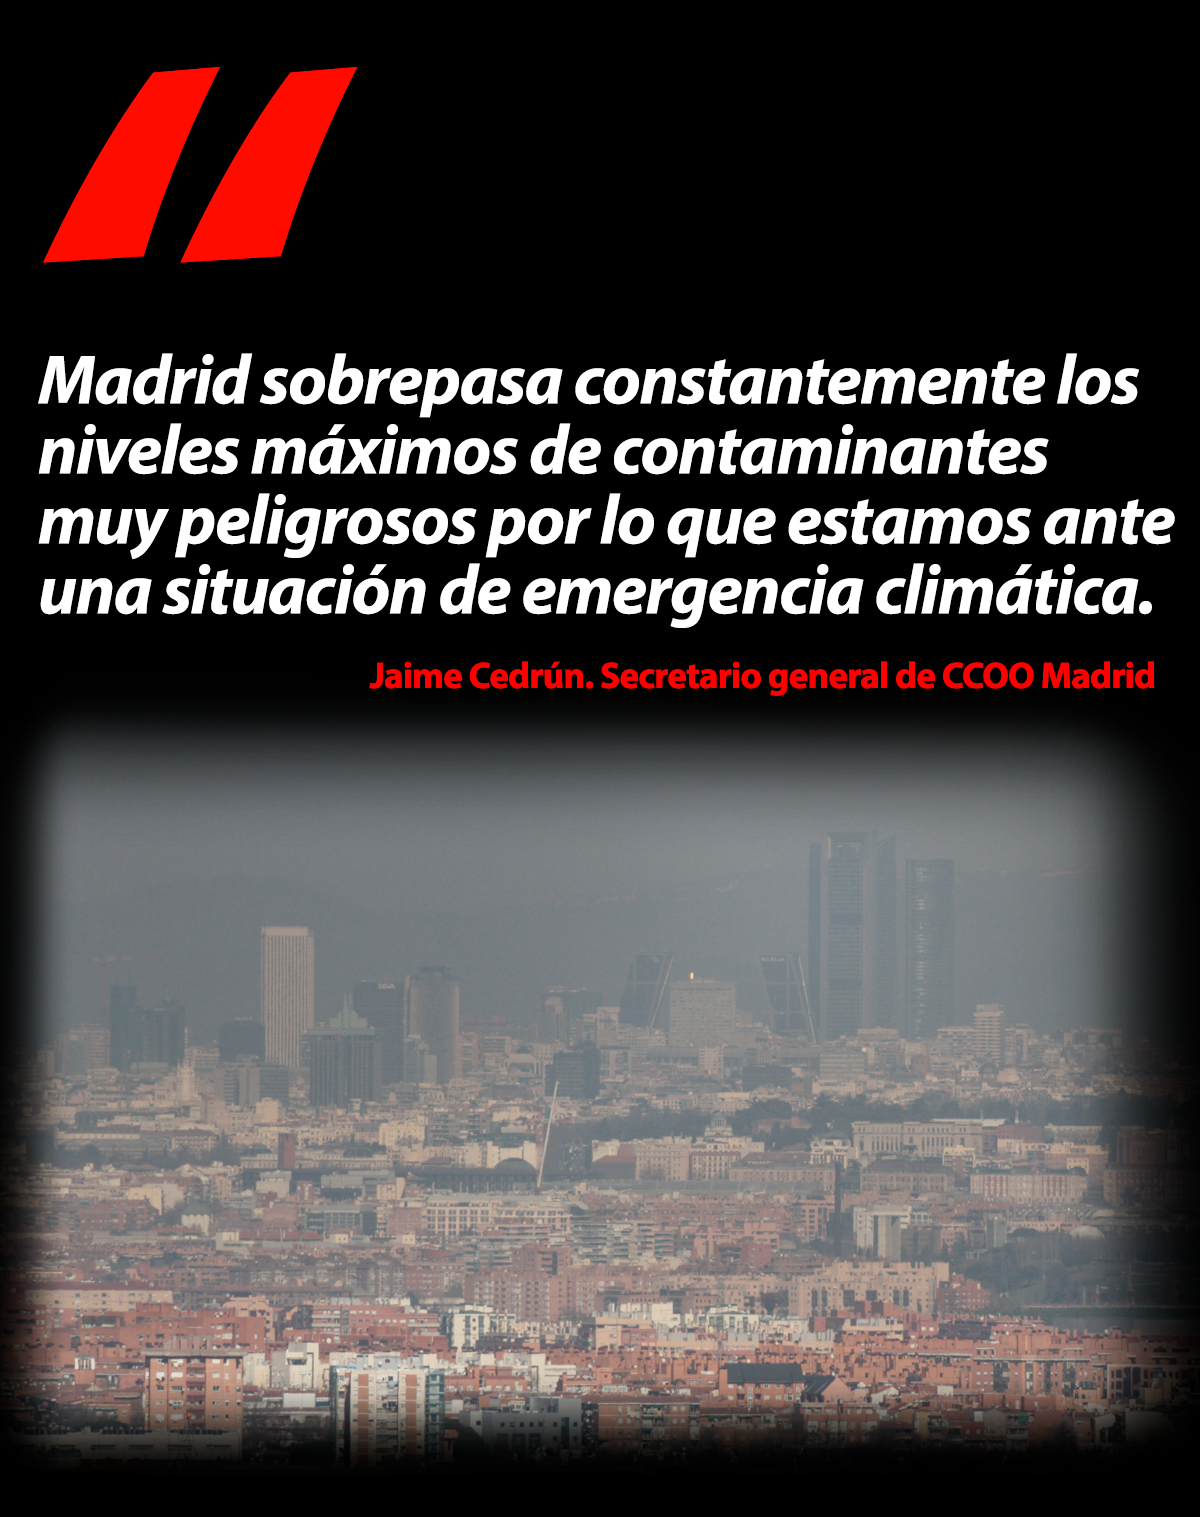 Madrid en estado de emergencia climática